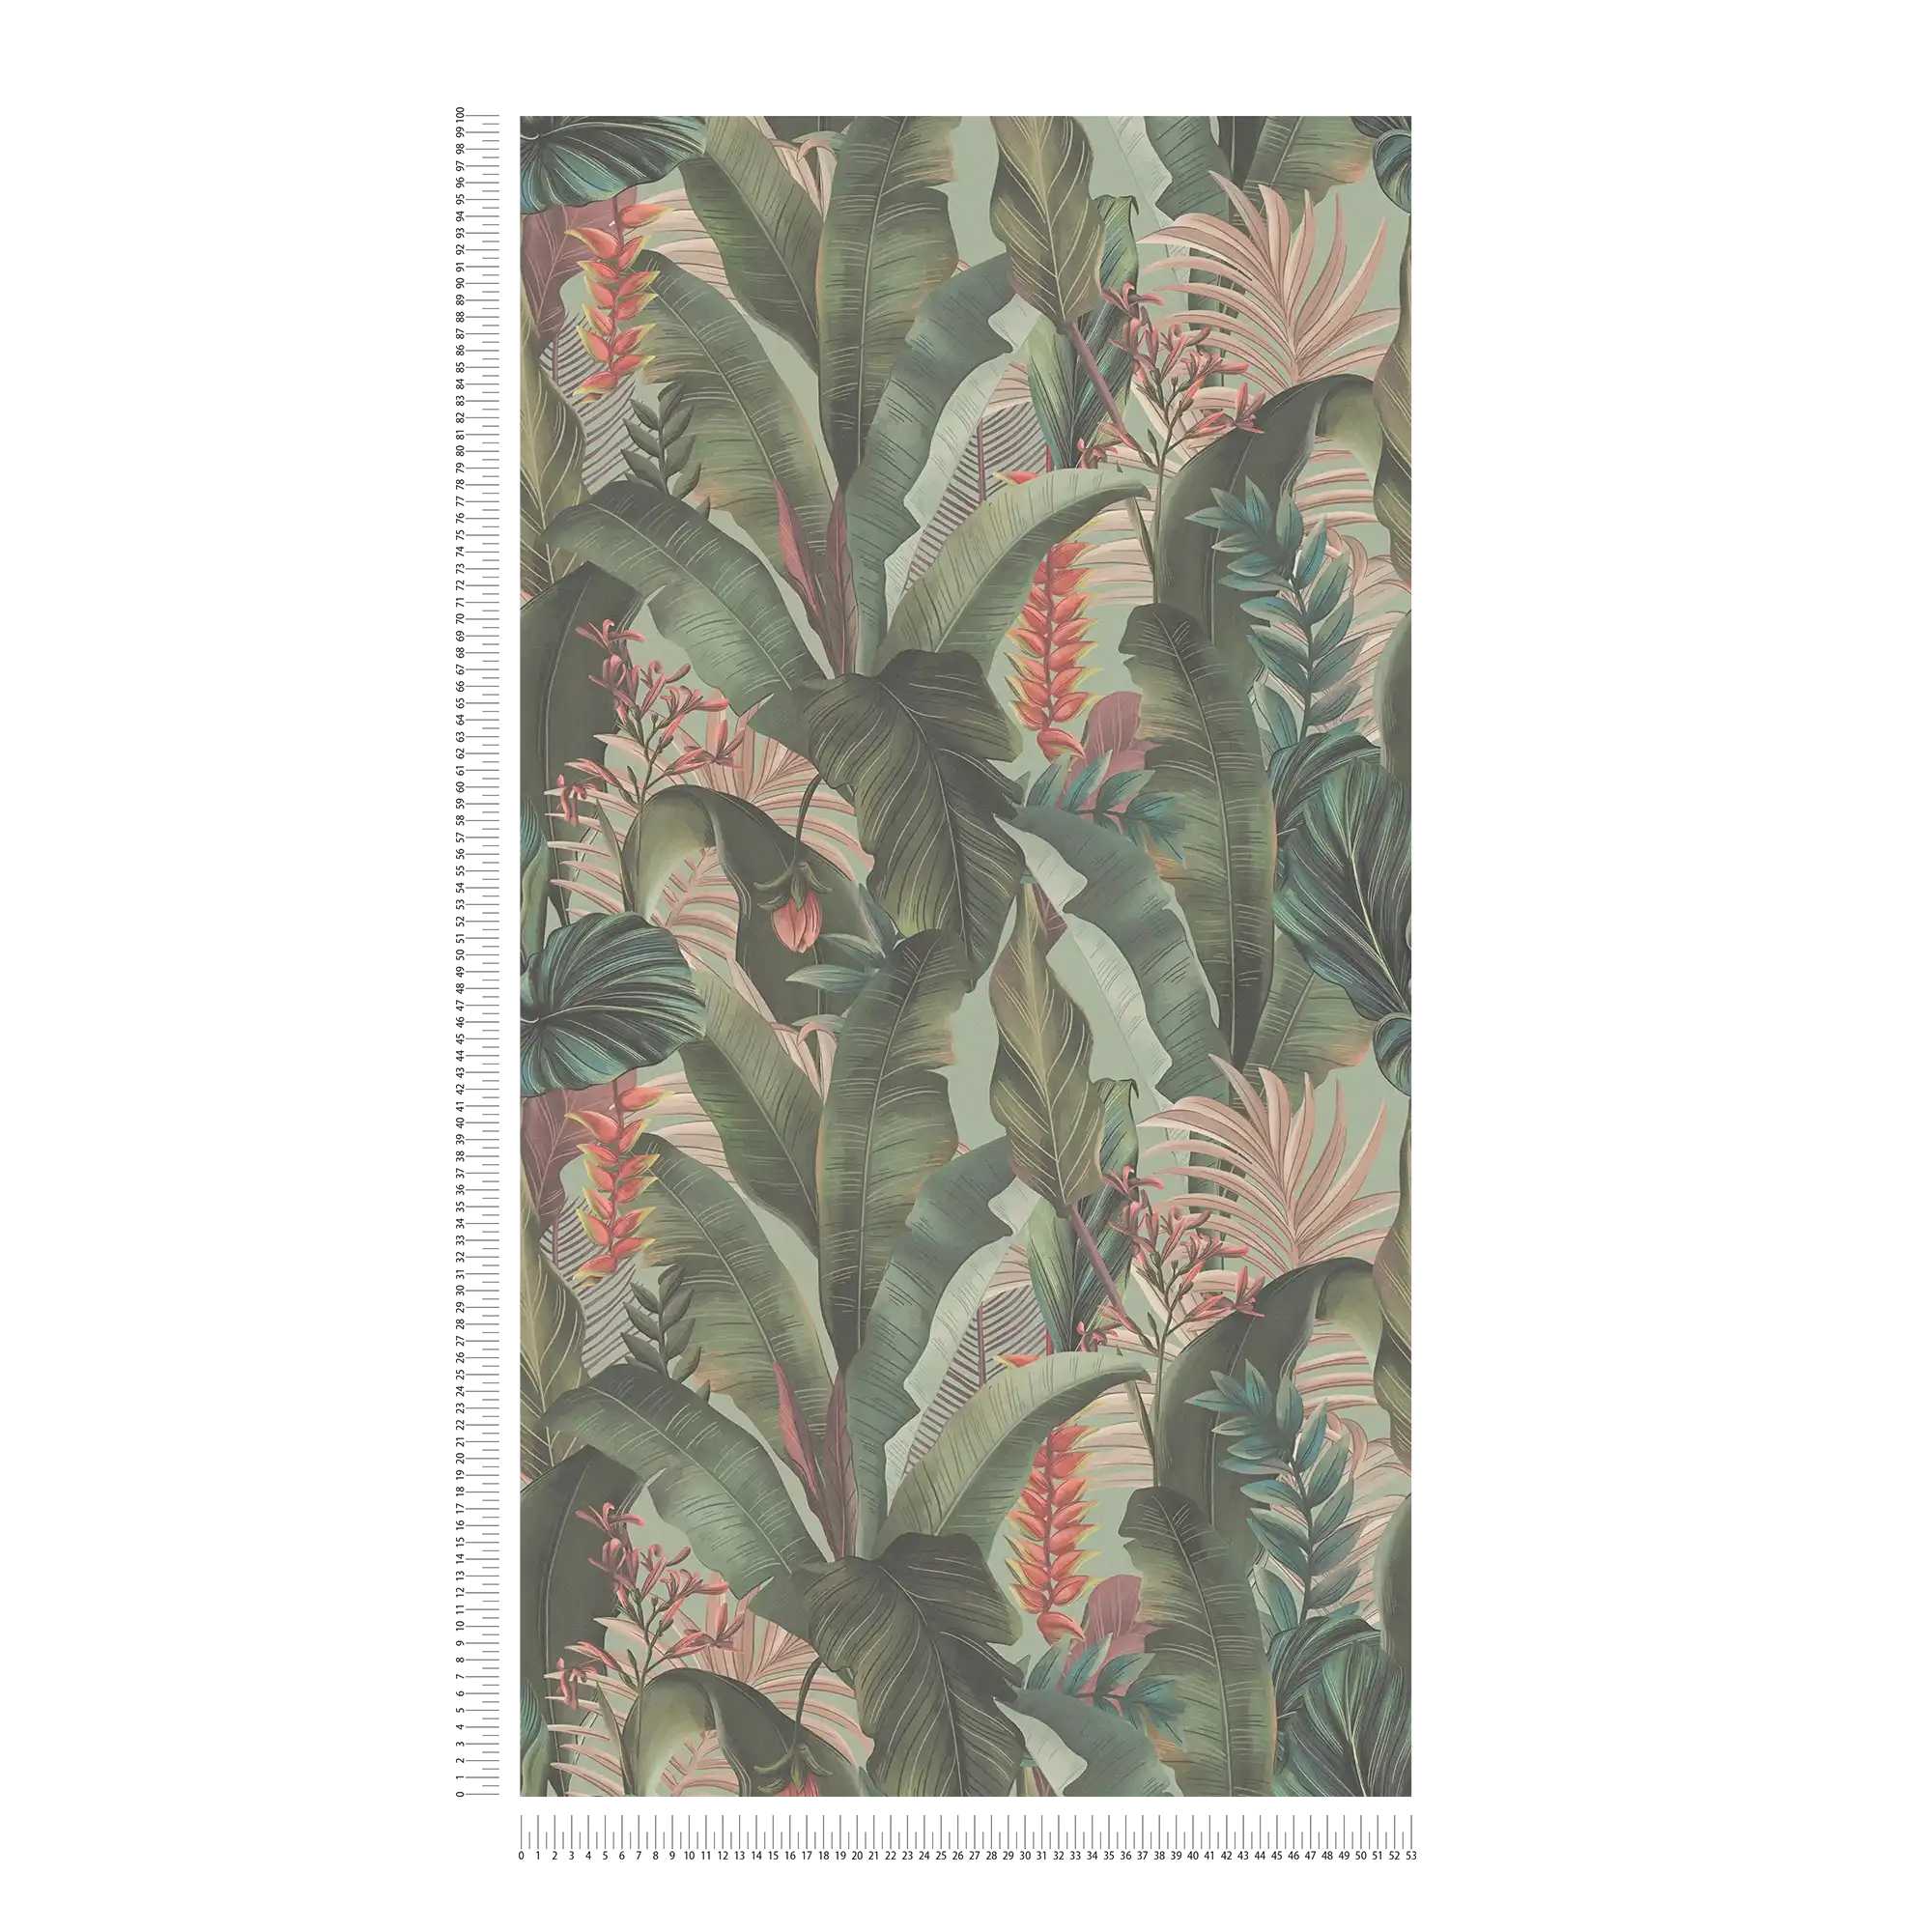             Florale Dschungeltapete mit Palmenblättern & Blüten strukturiert matt – Grün, Rosa, Rot
        